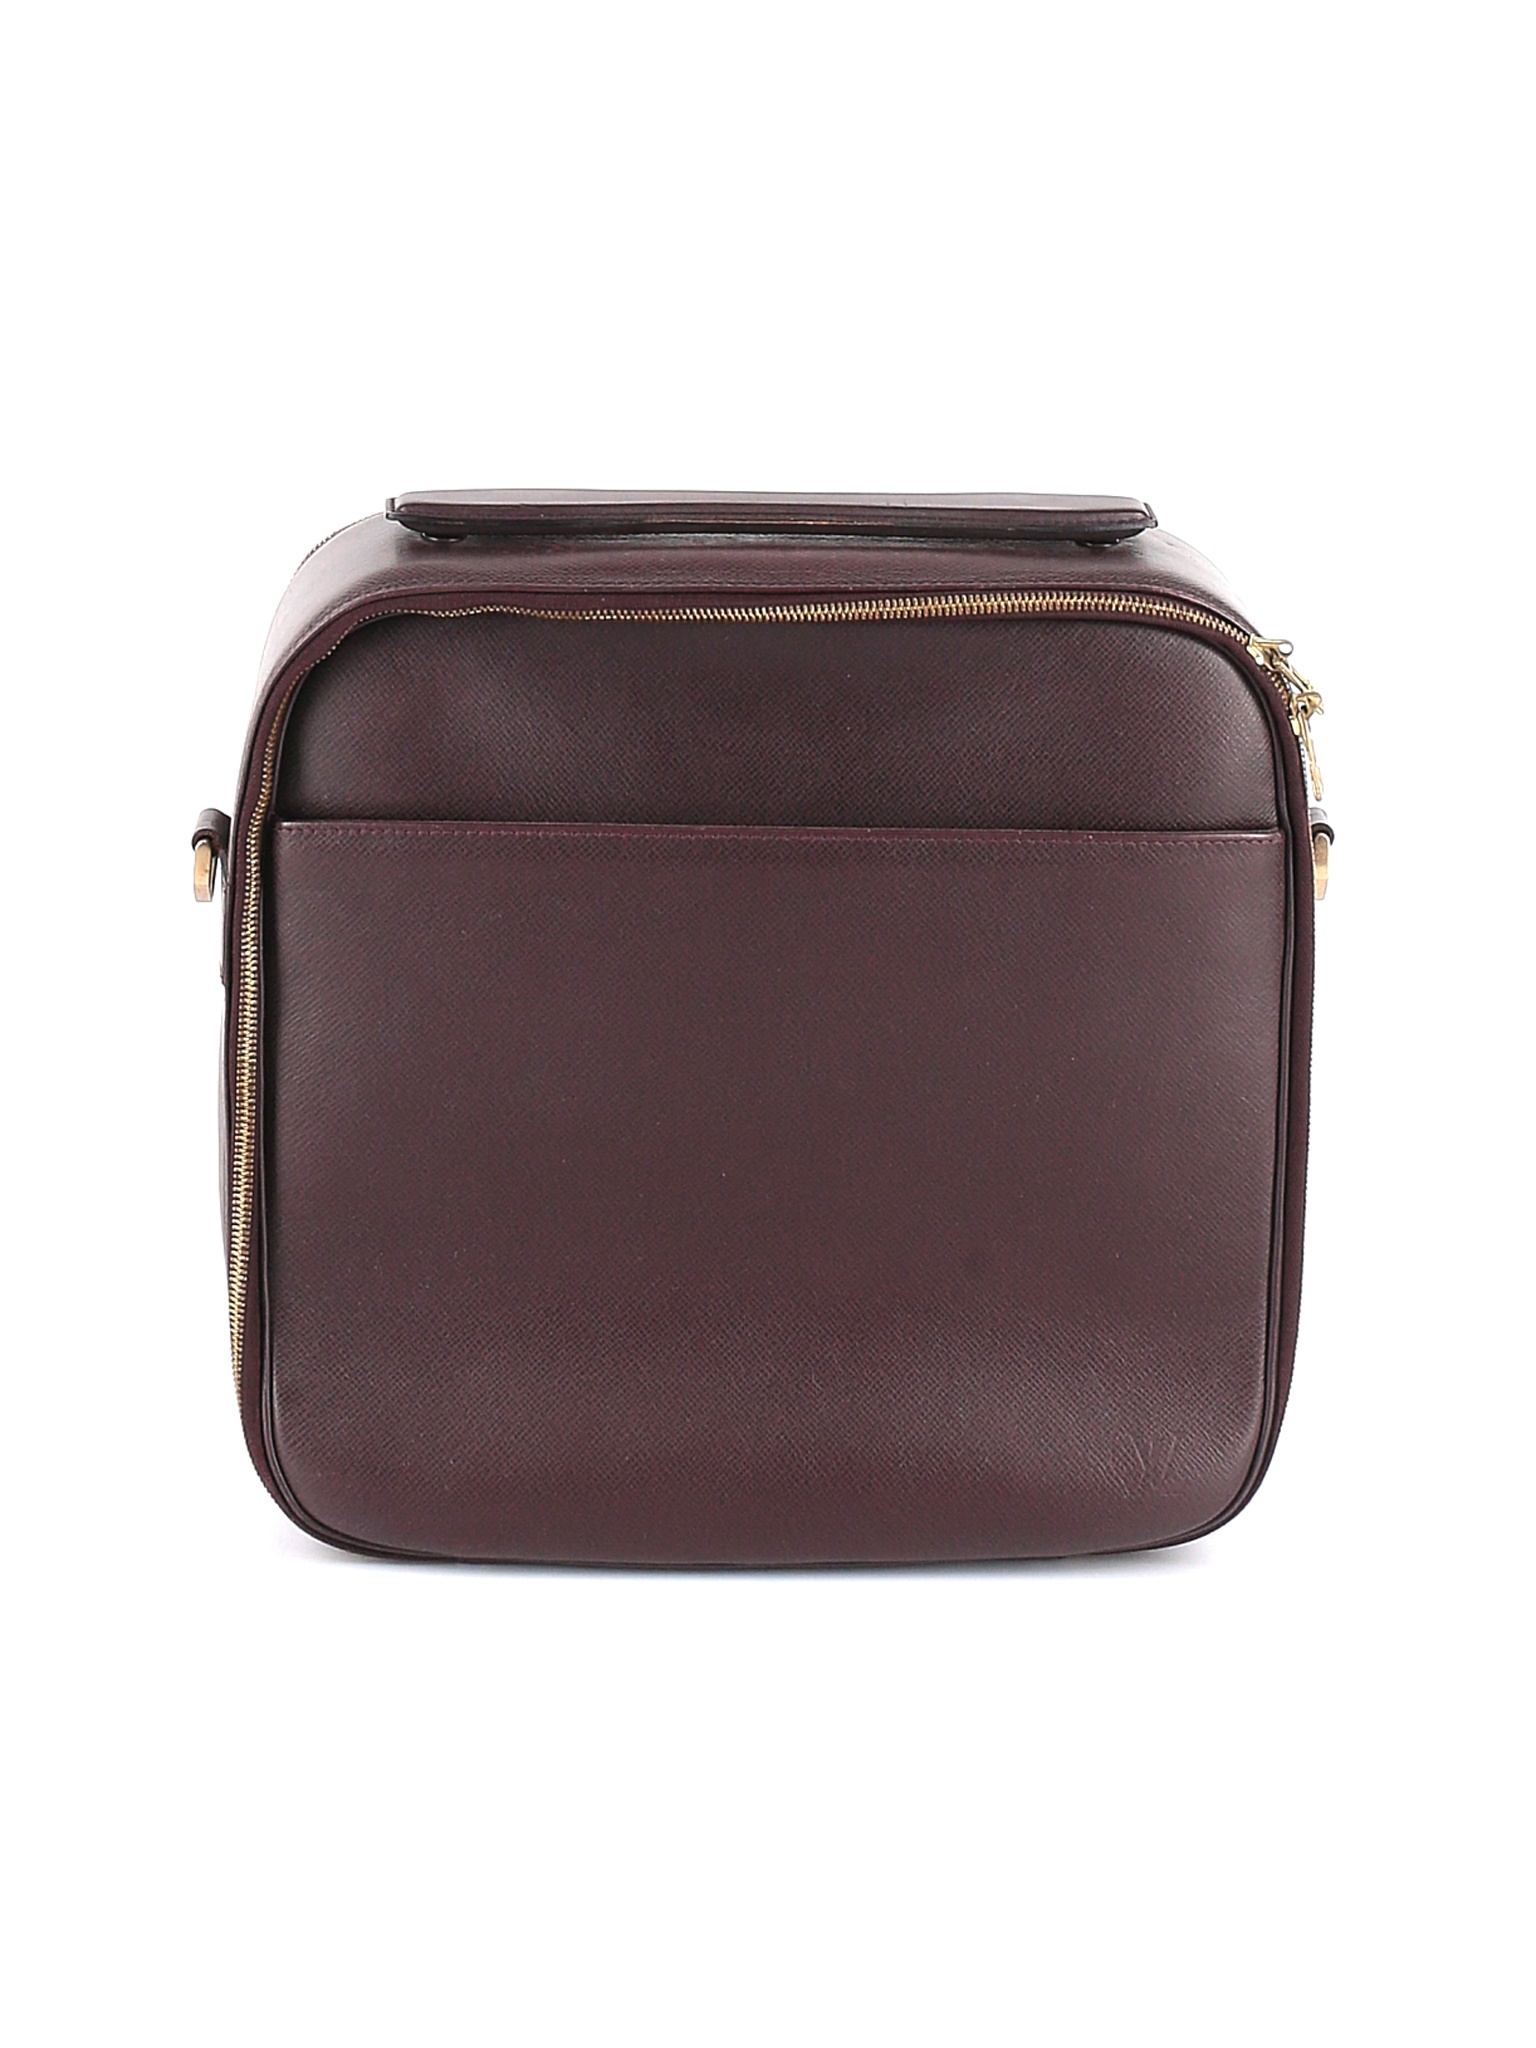 Louis Vuitton Women Brown Leather Satchel One Size | eBay